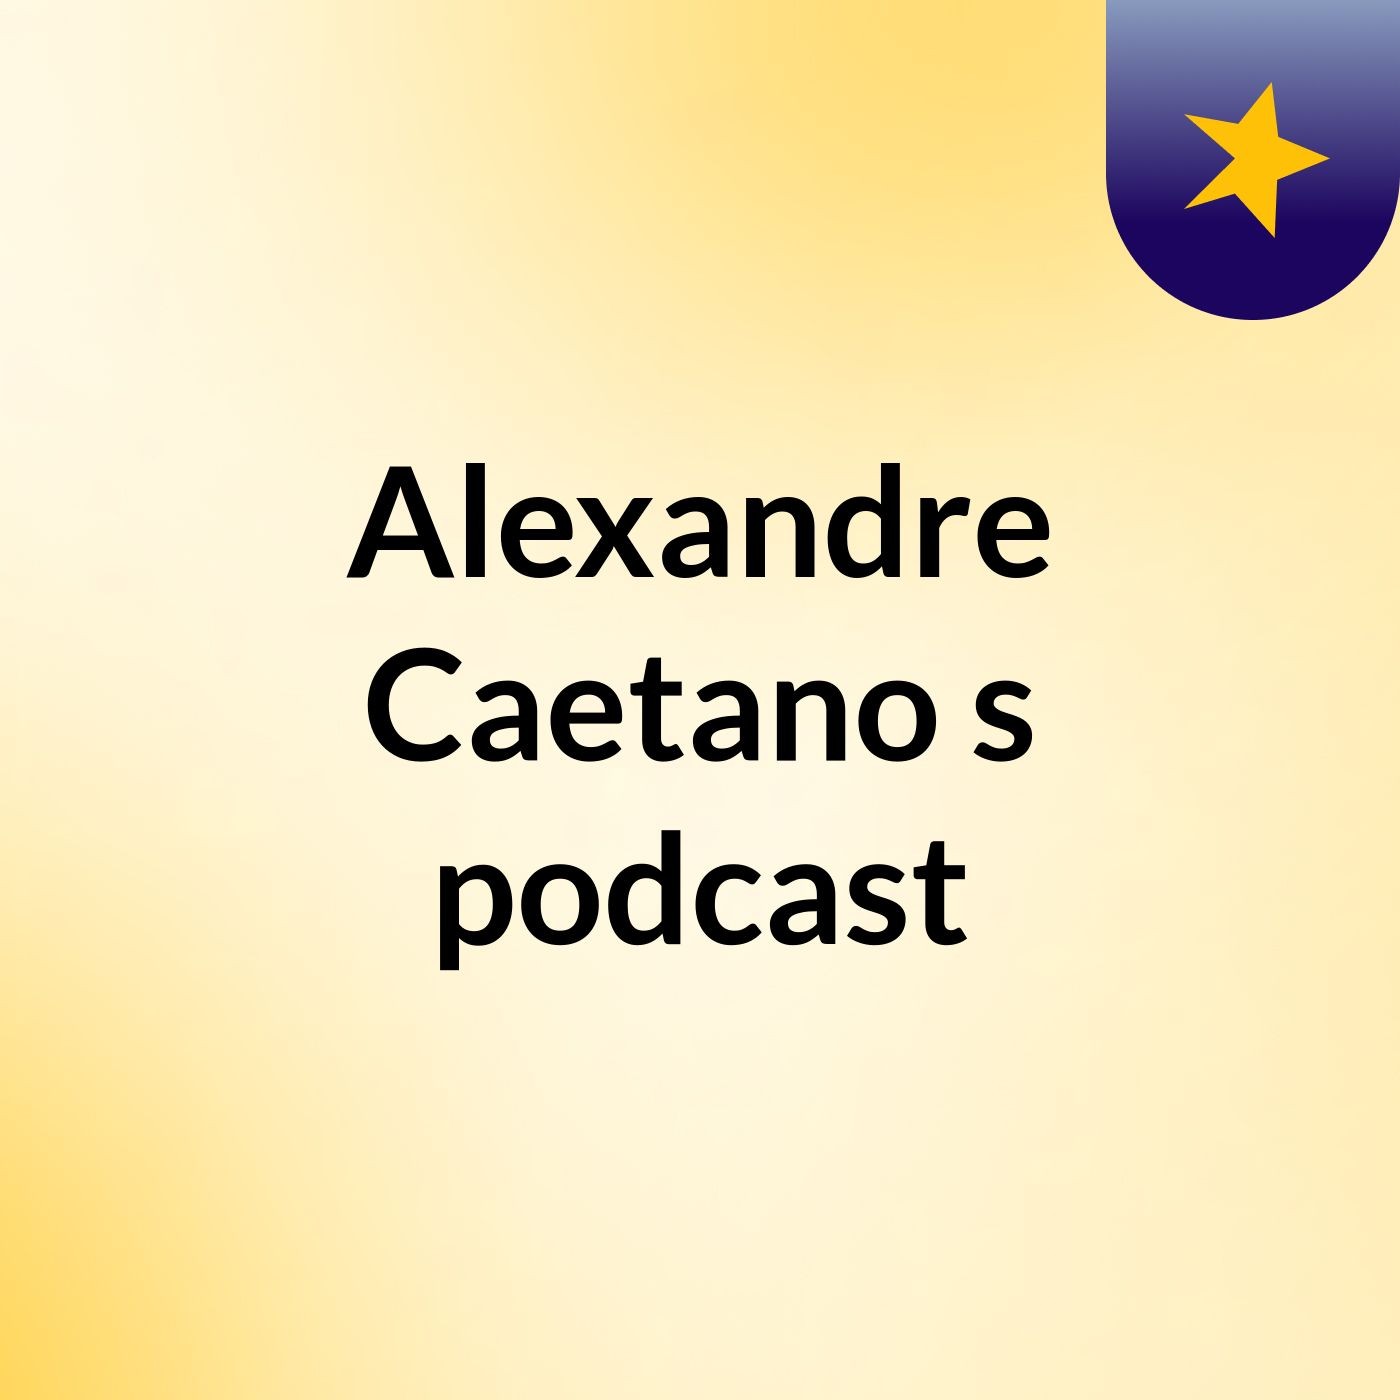 Alexandre Caetano's podcast